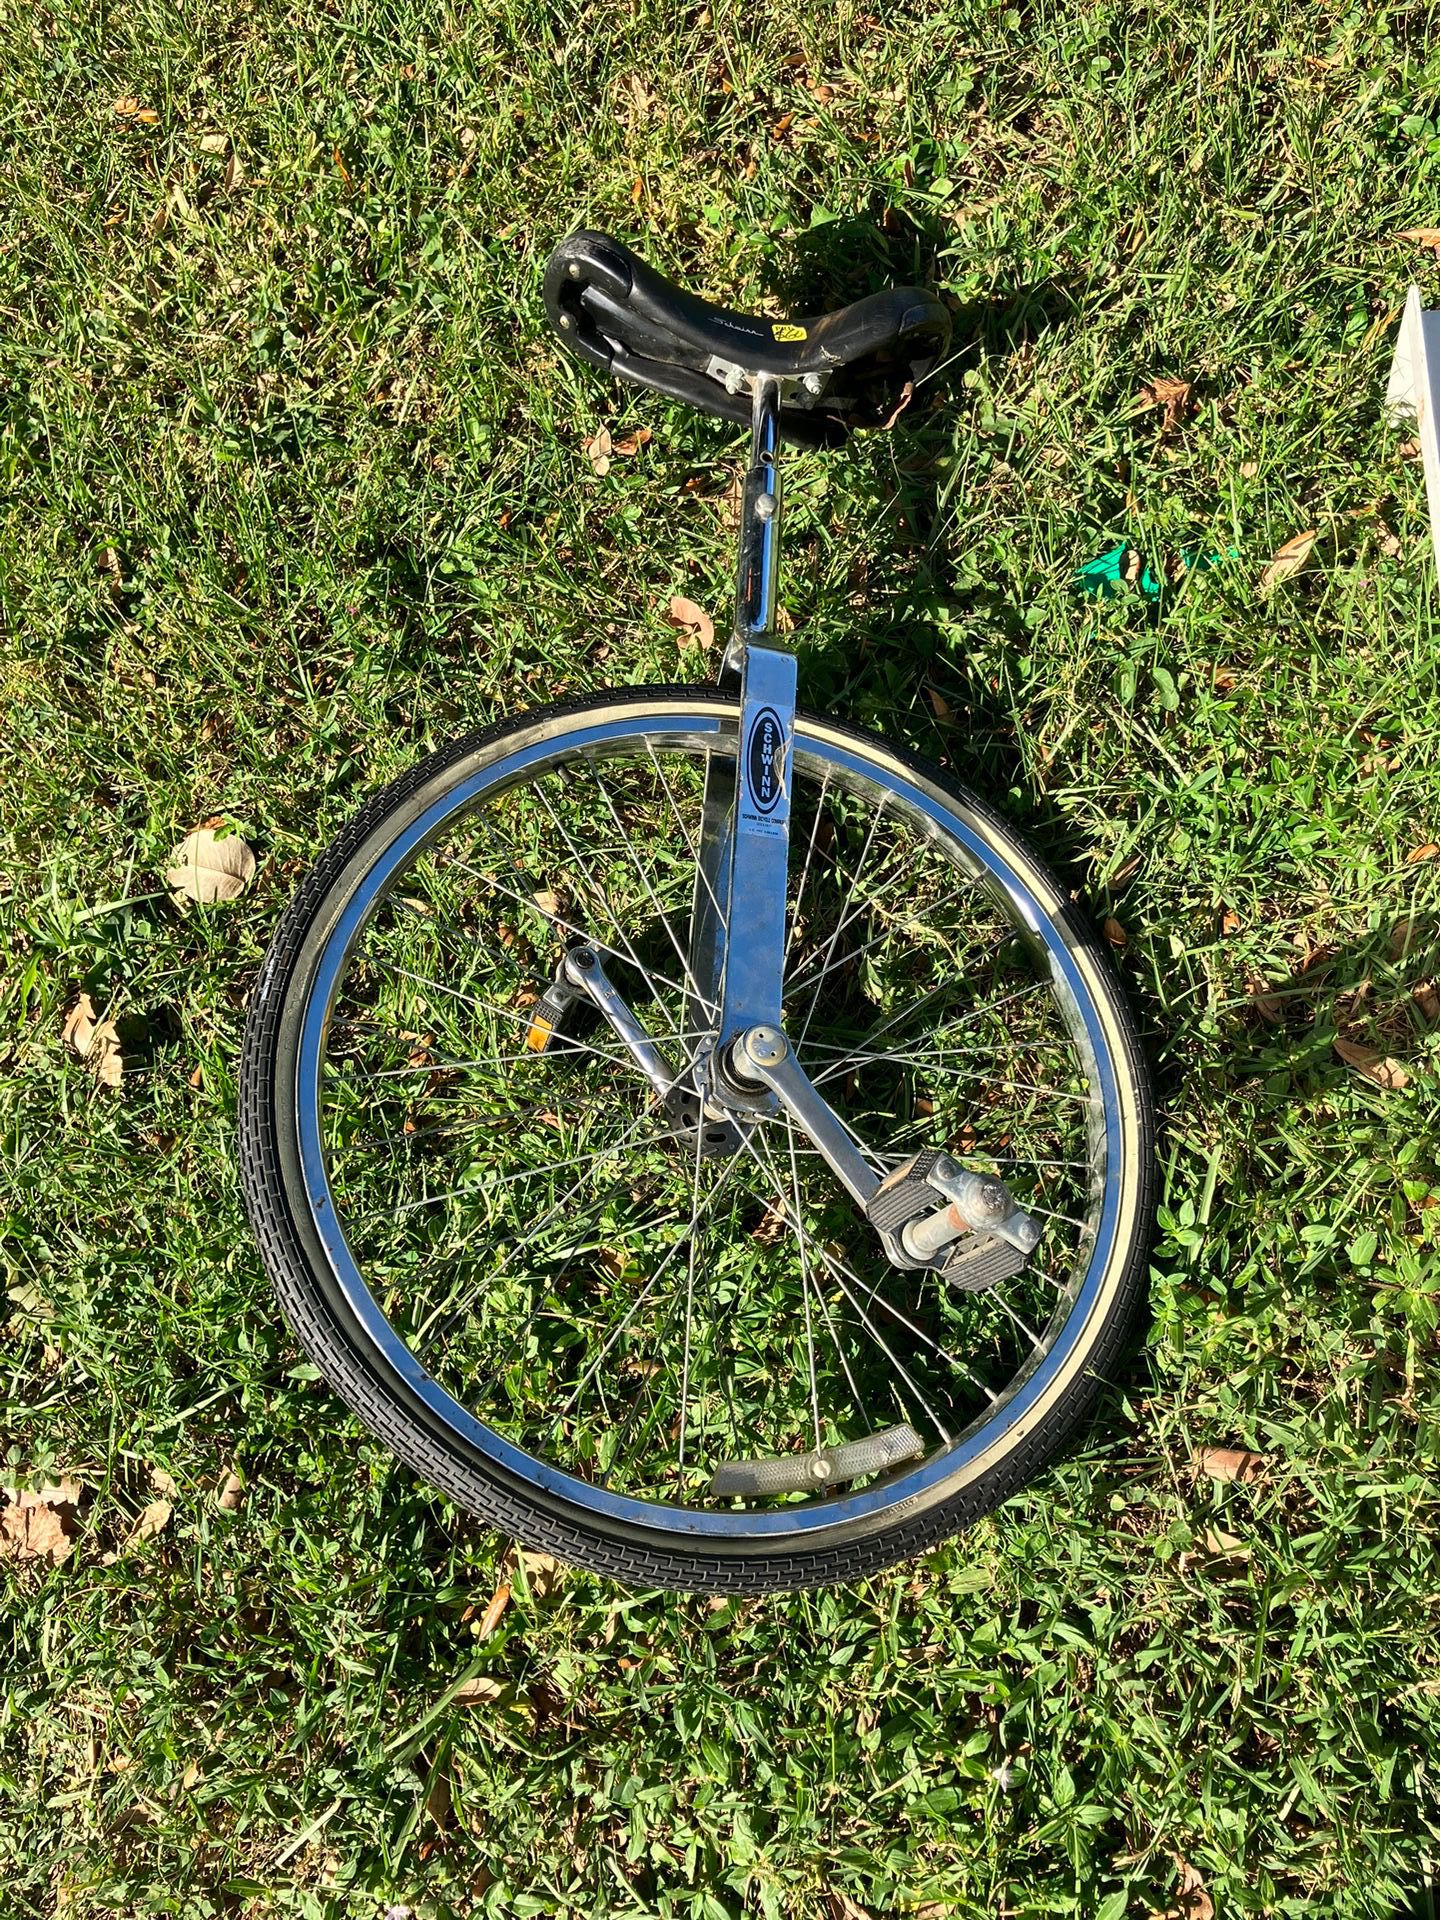 Schwinn Unicycle